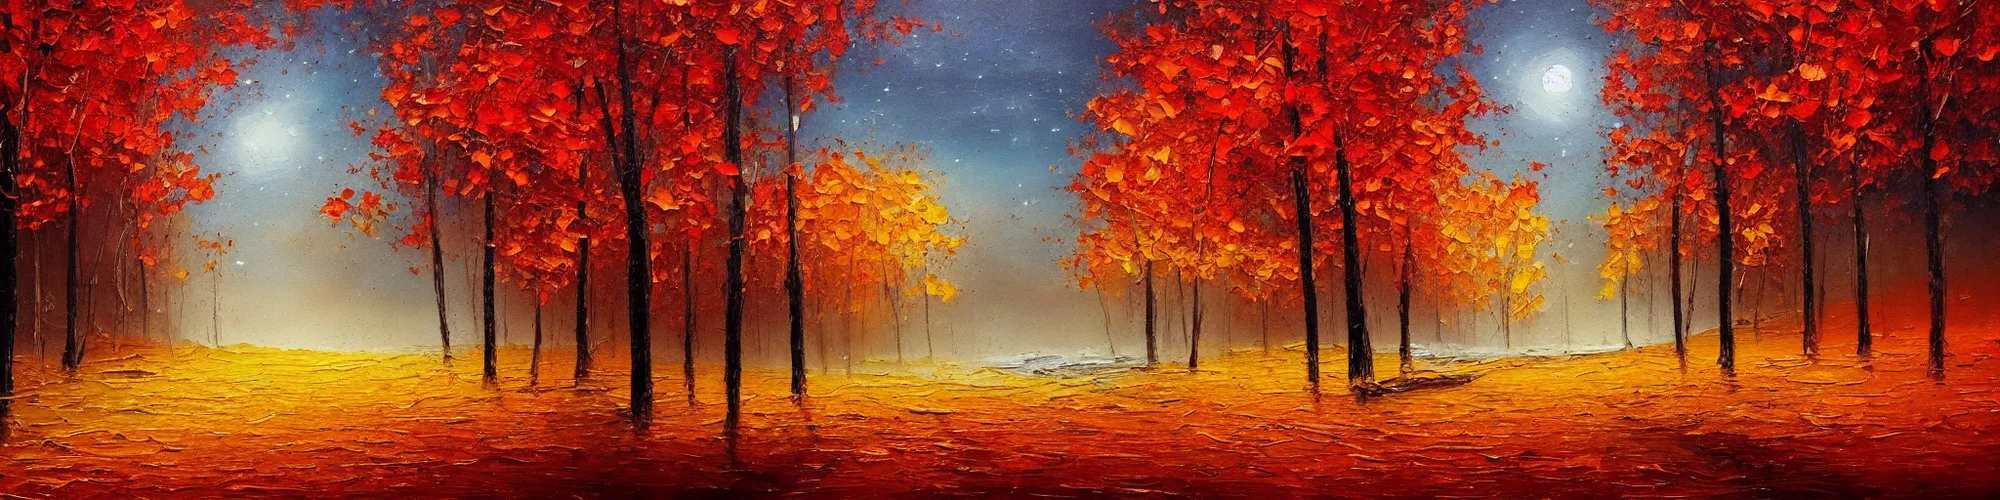 Prompt: painting of autumn landscape during night, award winning painting, beautiful, breathtaking, stunning scenery, trending on artstation, masterpiece